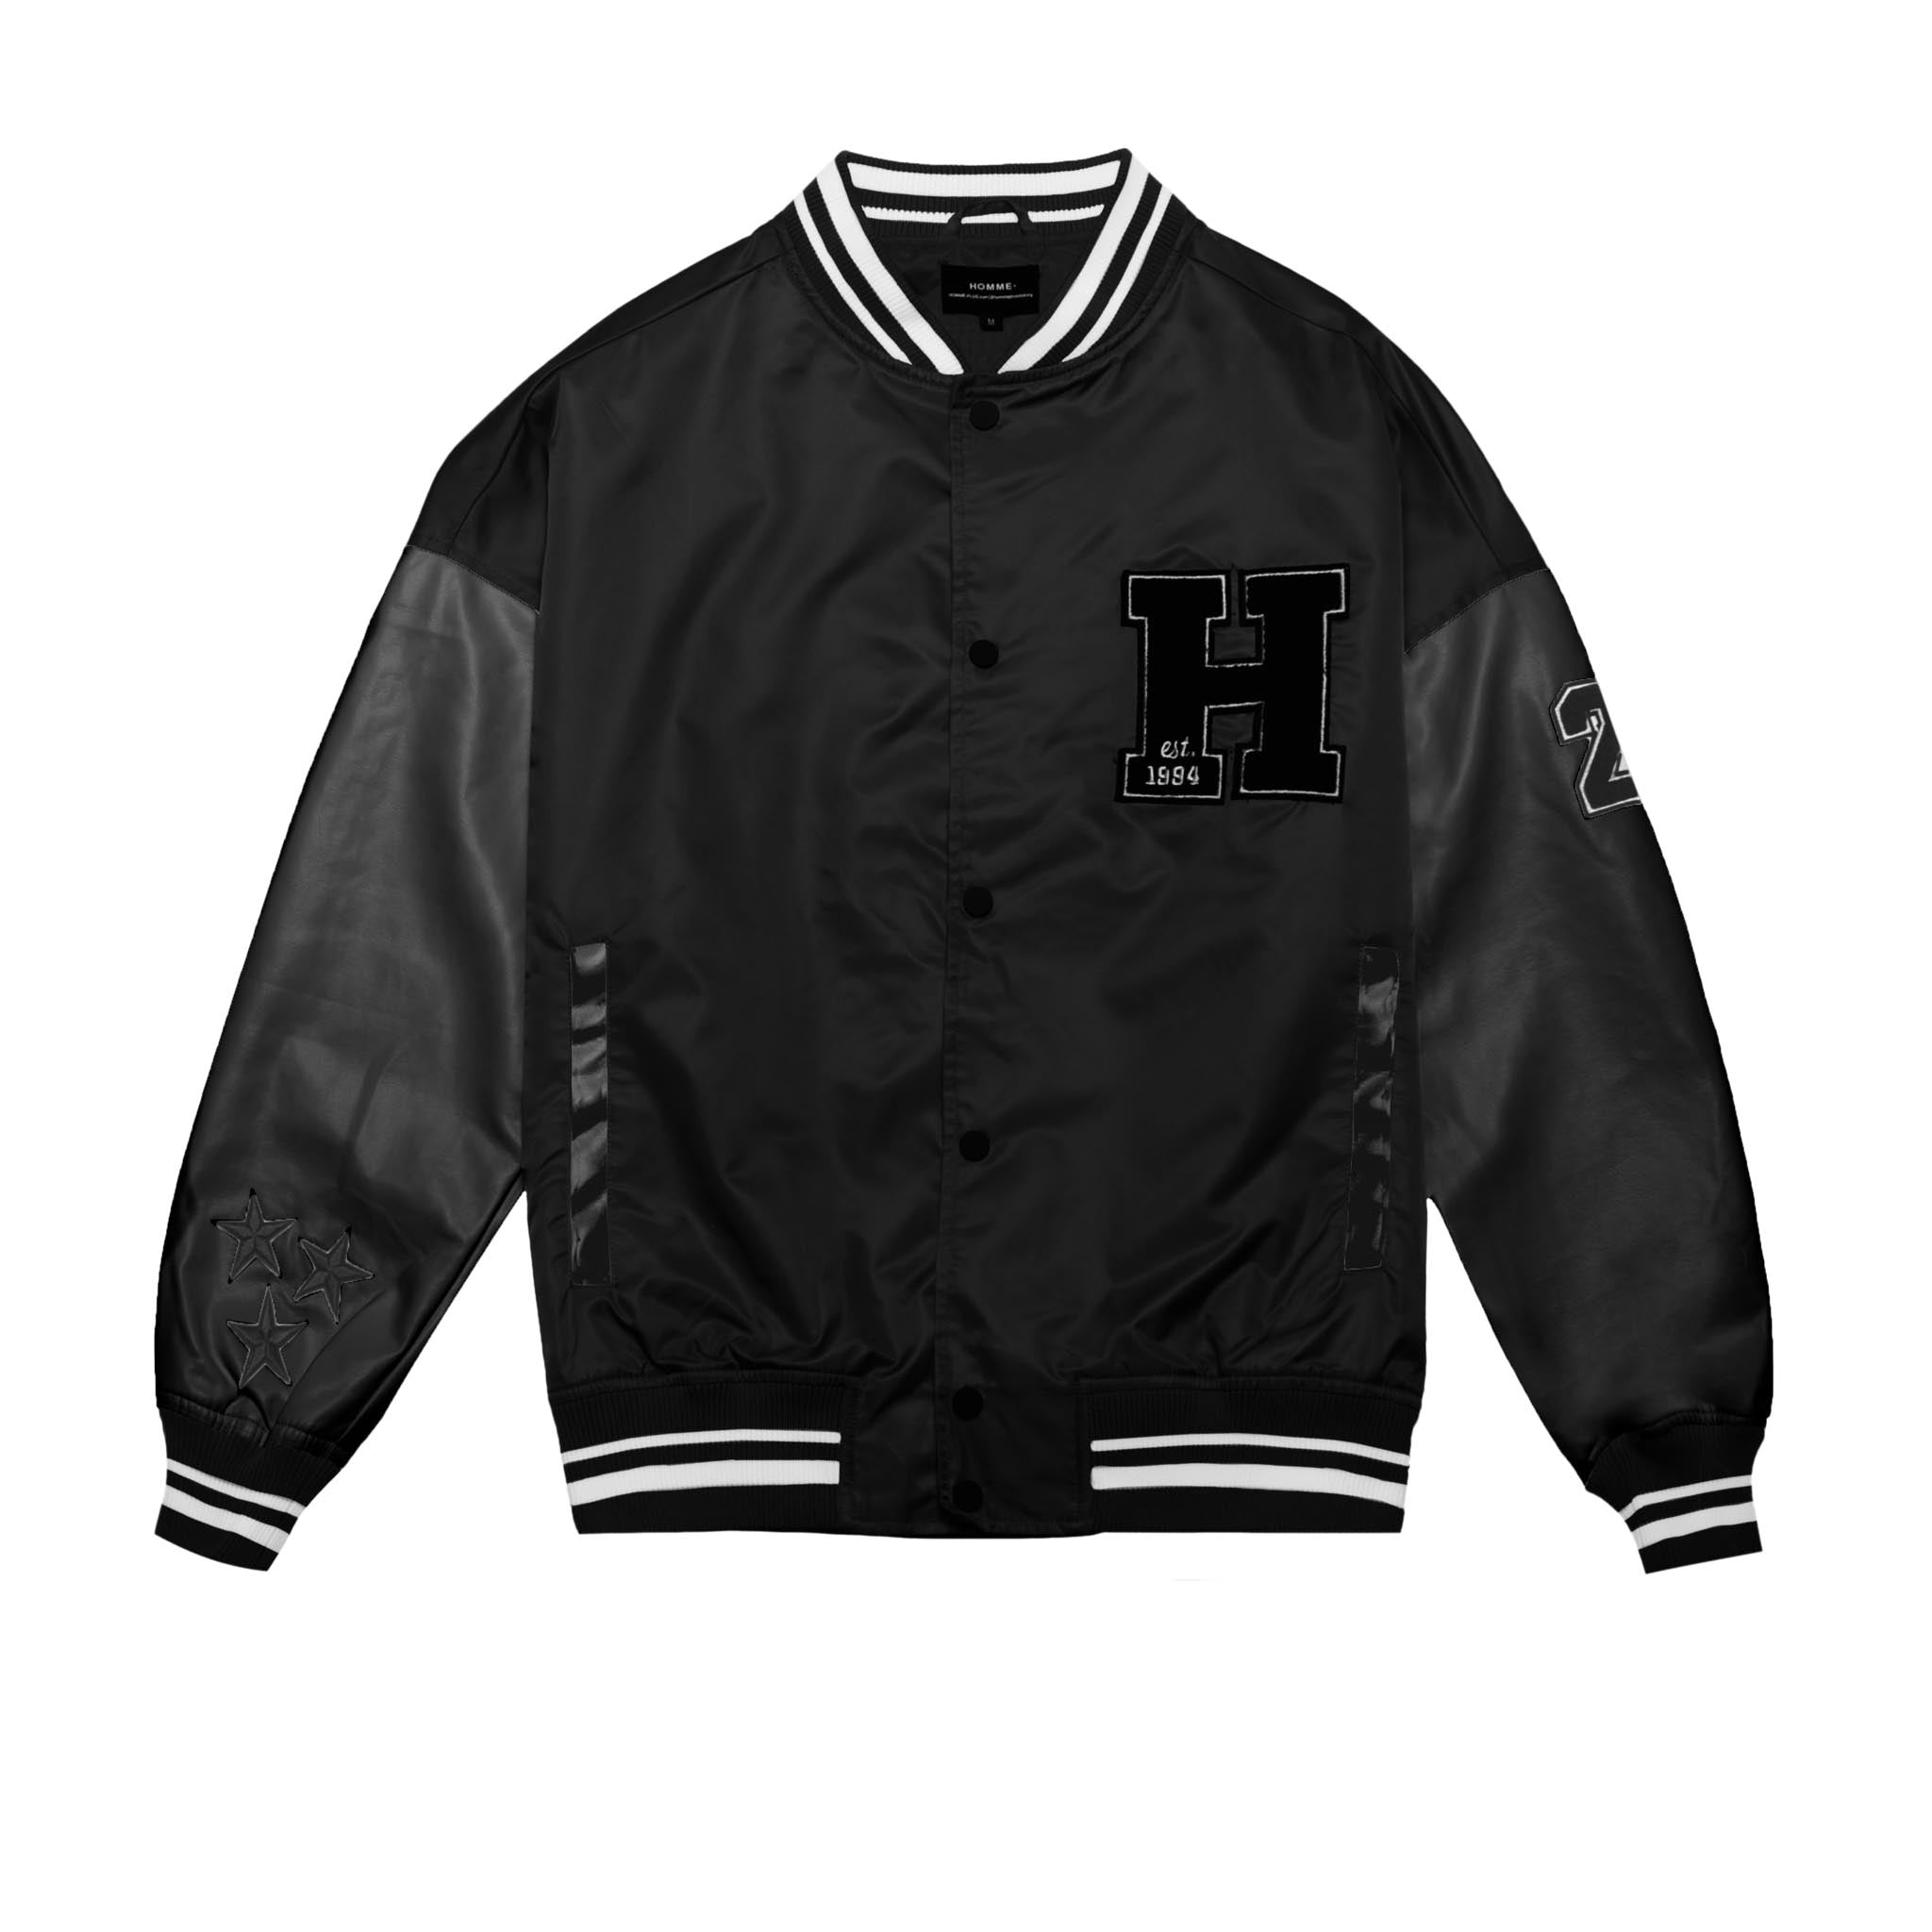 HOMME+ Varsity Jacket Black/Black